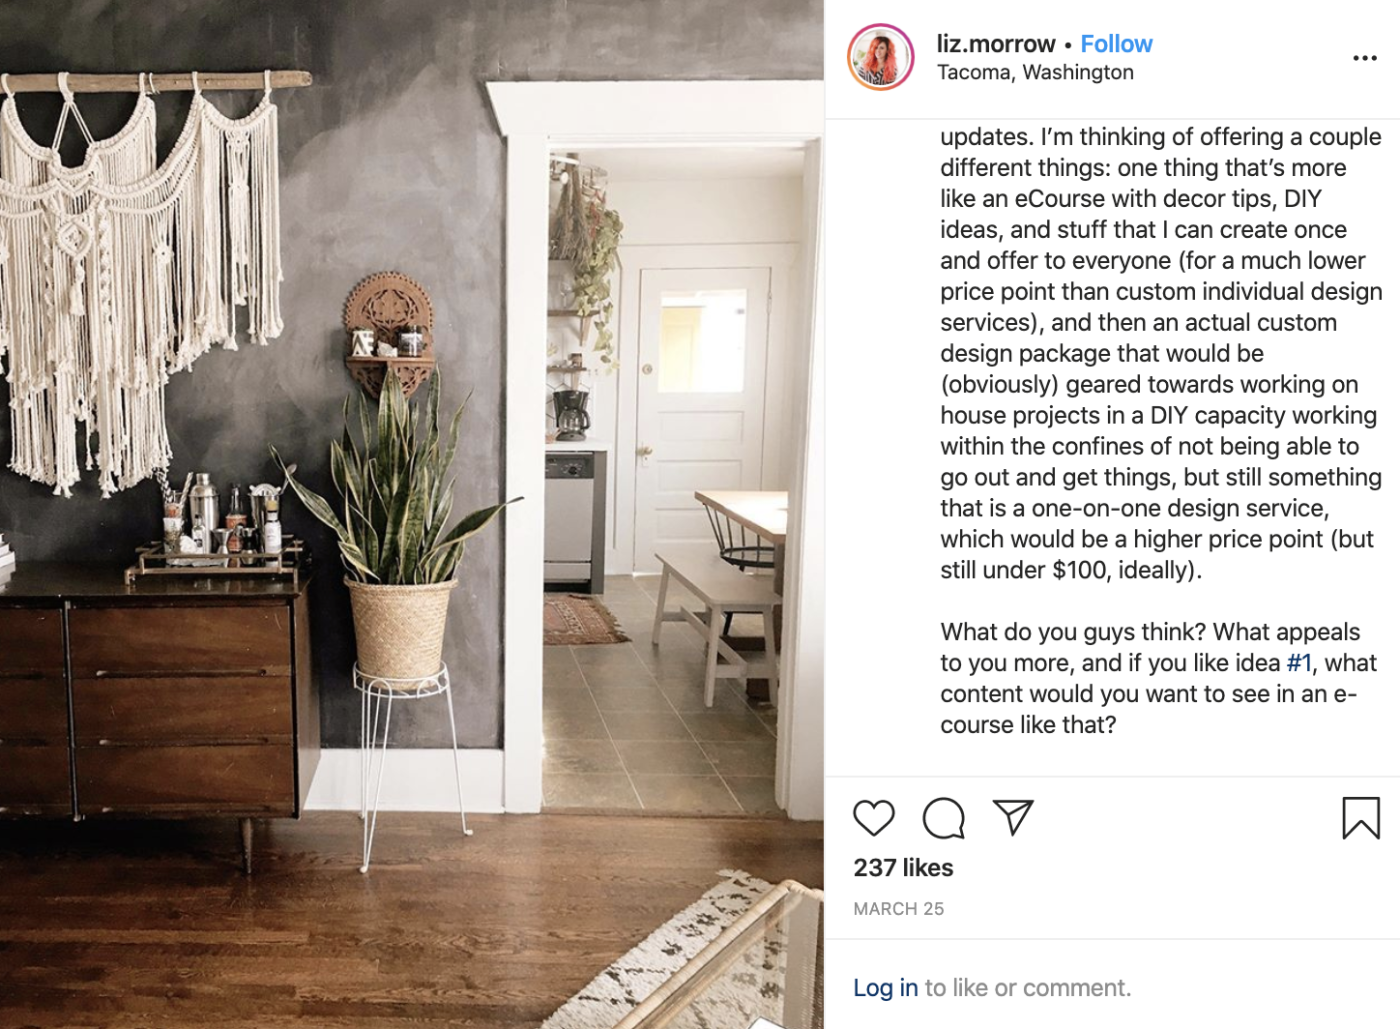 Instagram post where Liz Morrow asks her followers for ideas